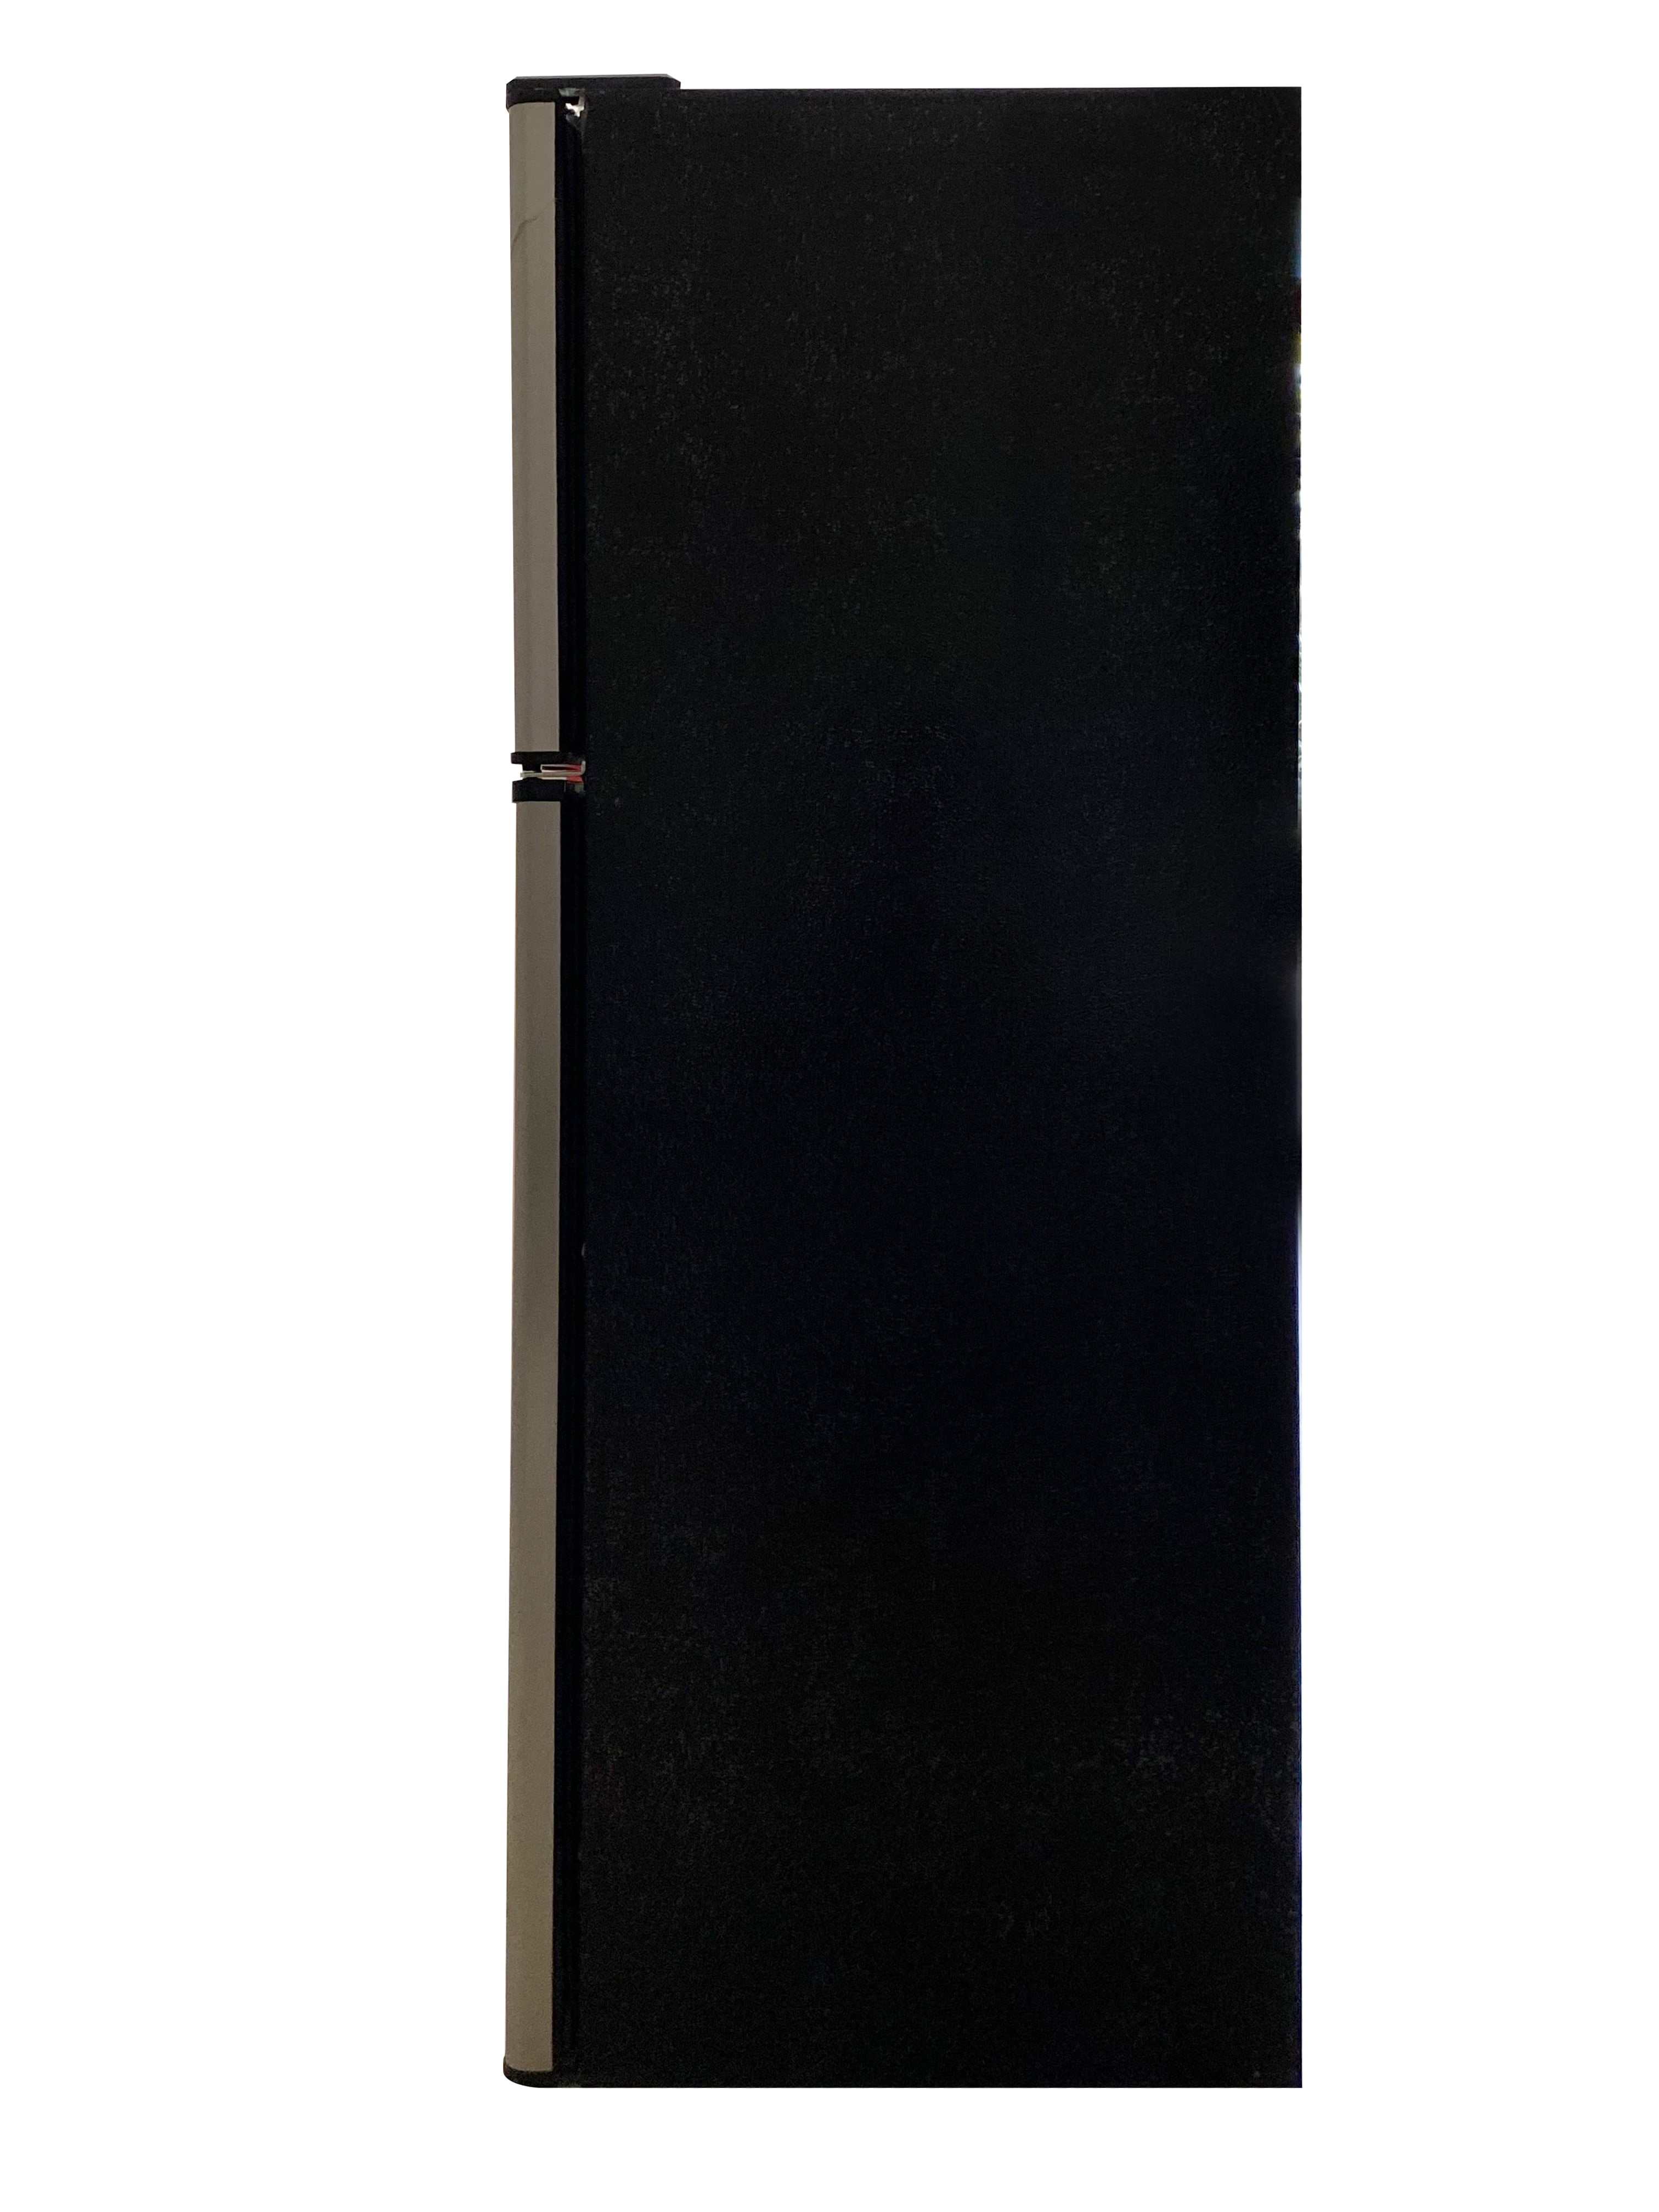 Thomson 4.5 Cu. Ft. Mini Fridge Black Stainless Steel TFR469 - Best Buy